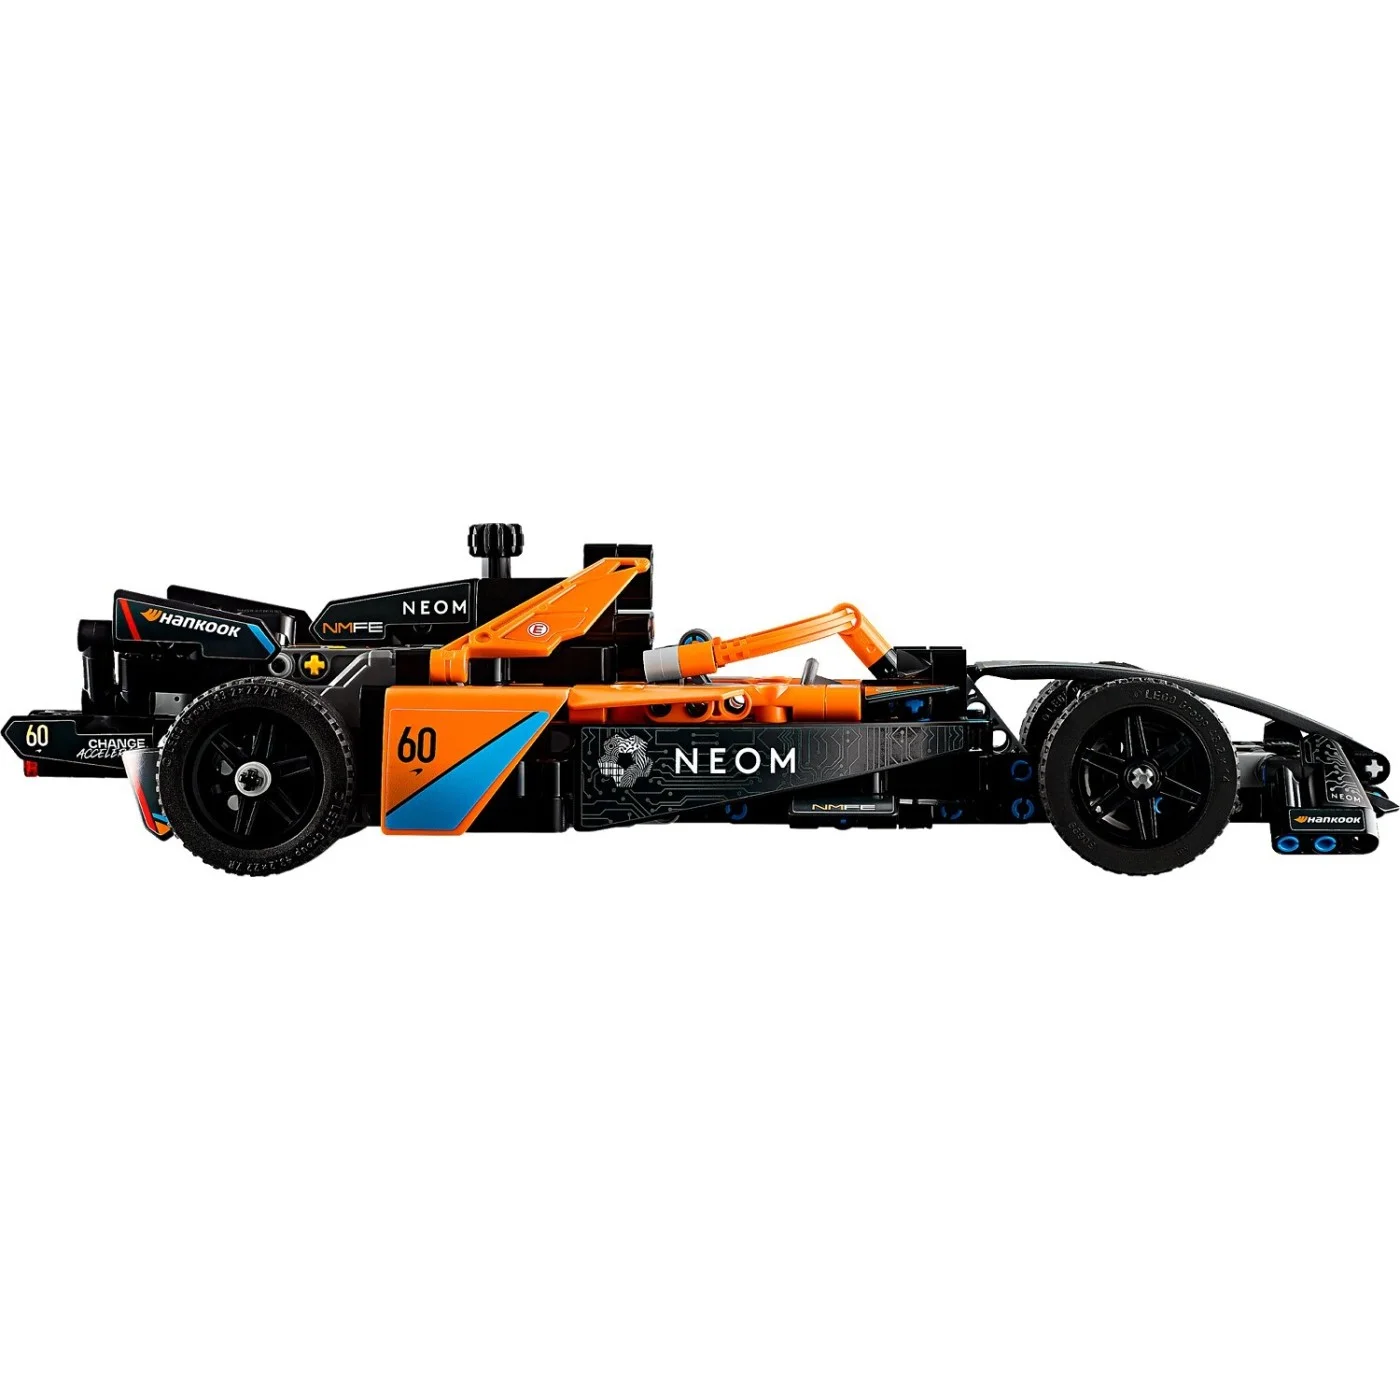 Lego Technic - Neon McLaren Formula E Race Car 42169